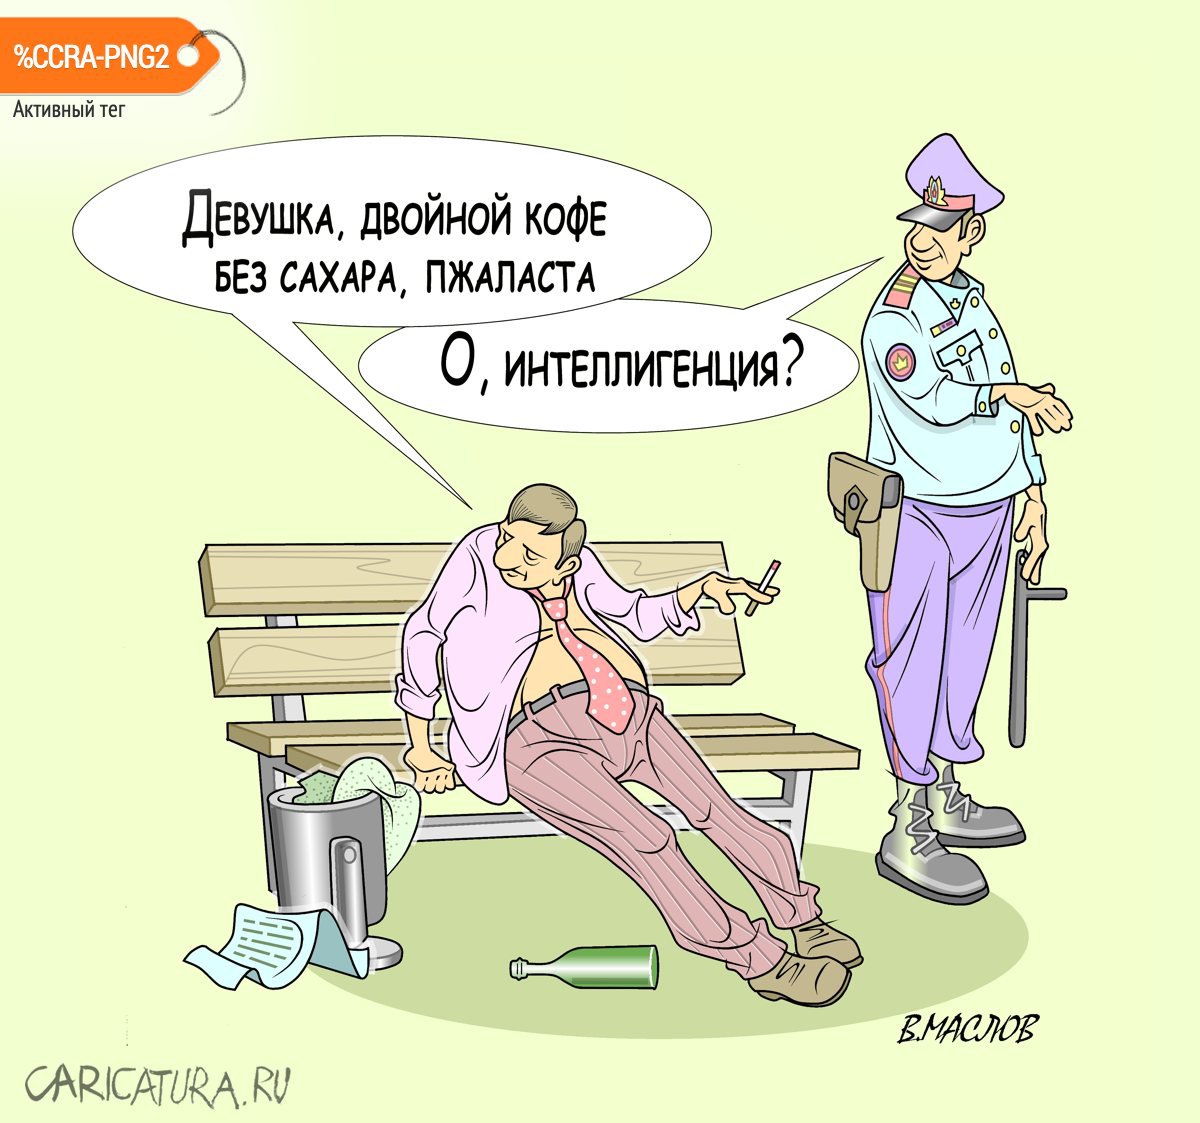 Карикатура "Интеллигент", Виталий Маслов